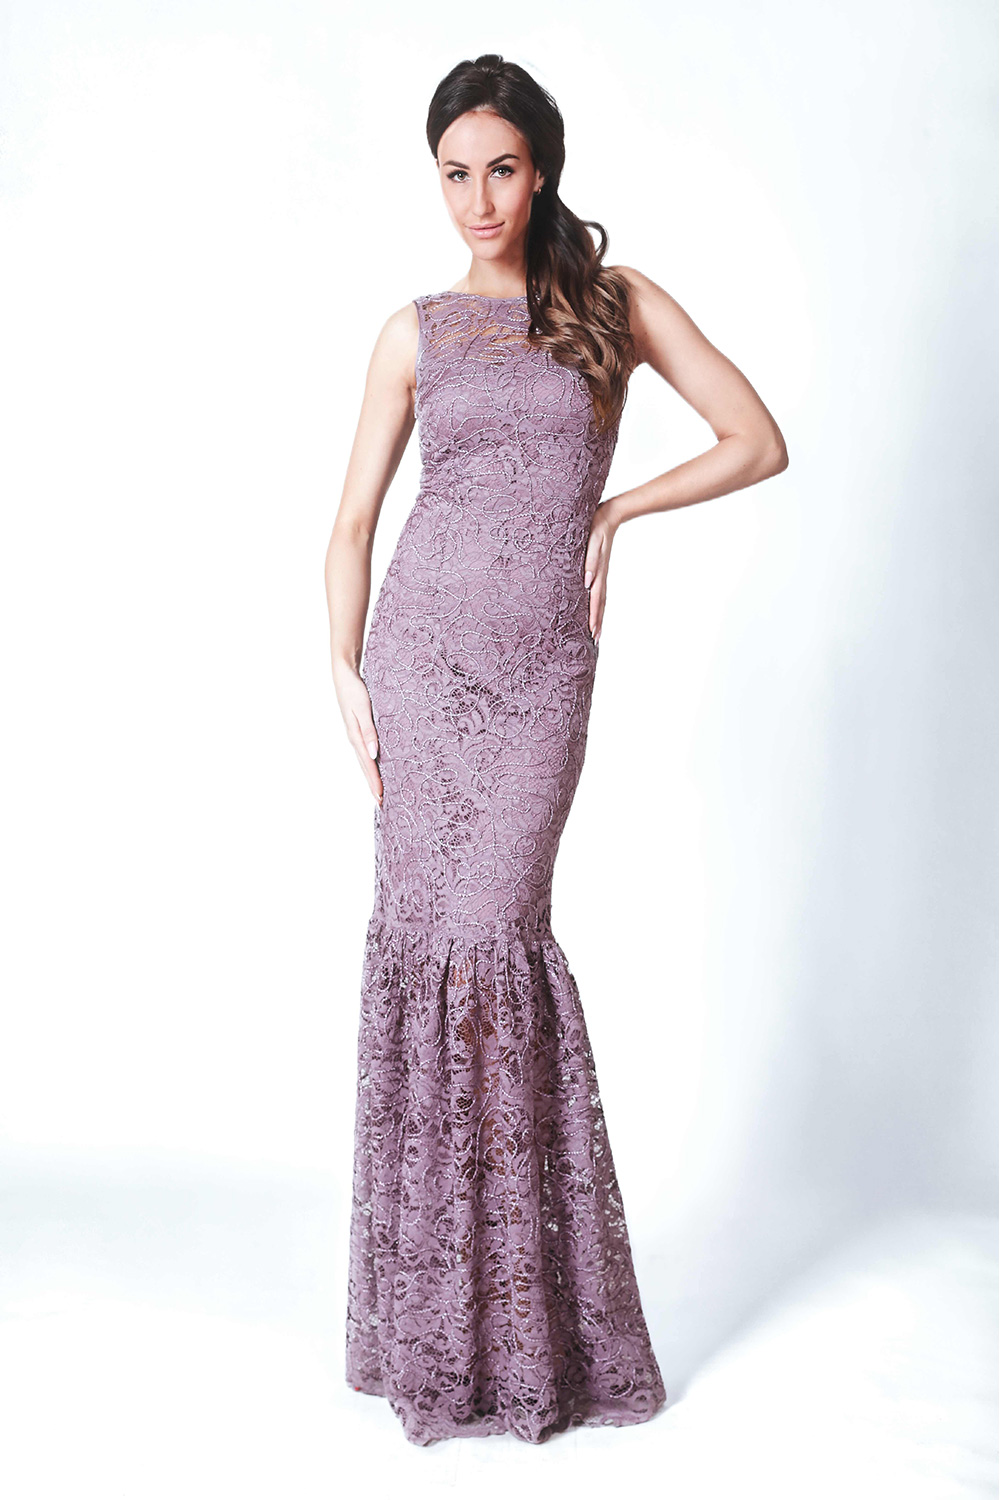 Woman in elegant purple lace gown posing.